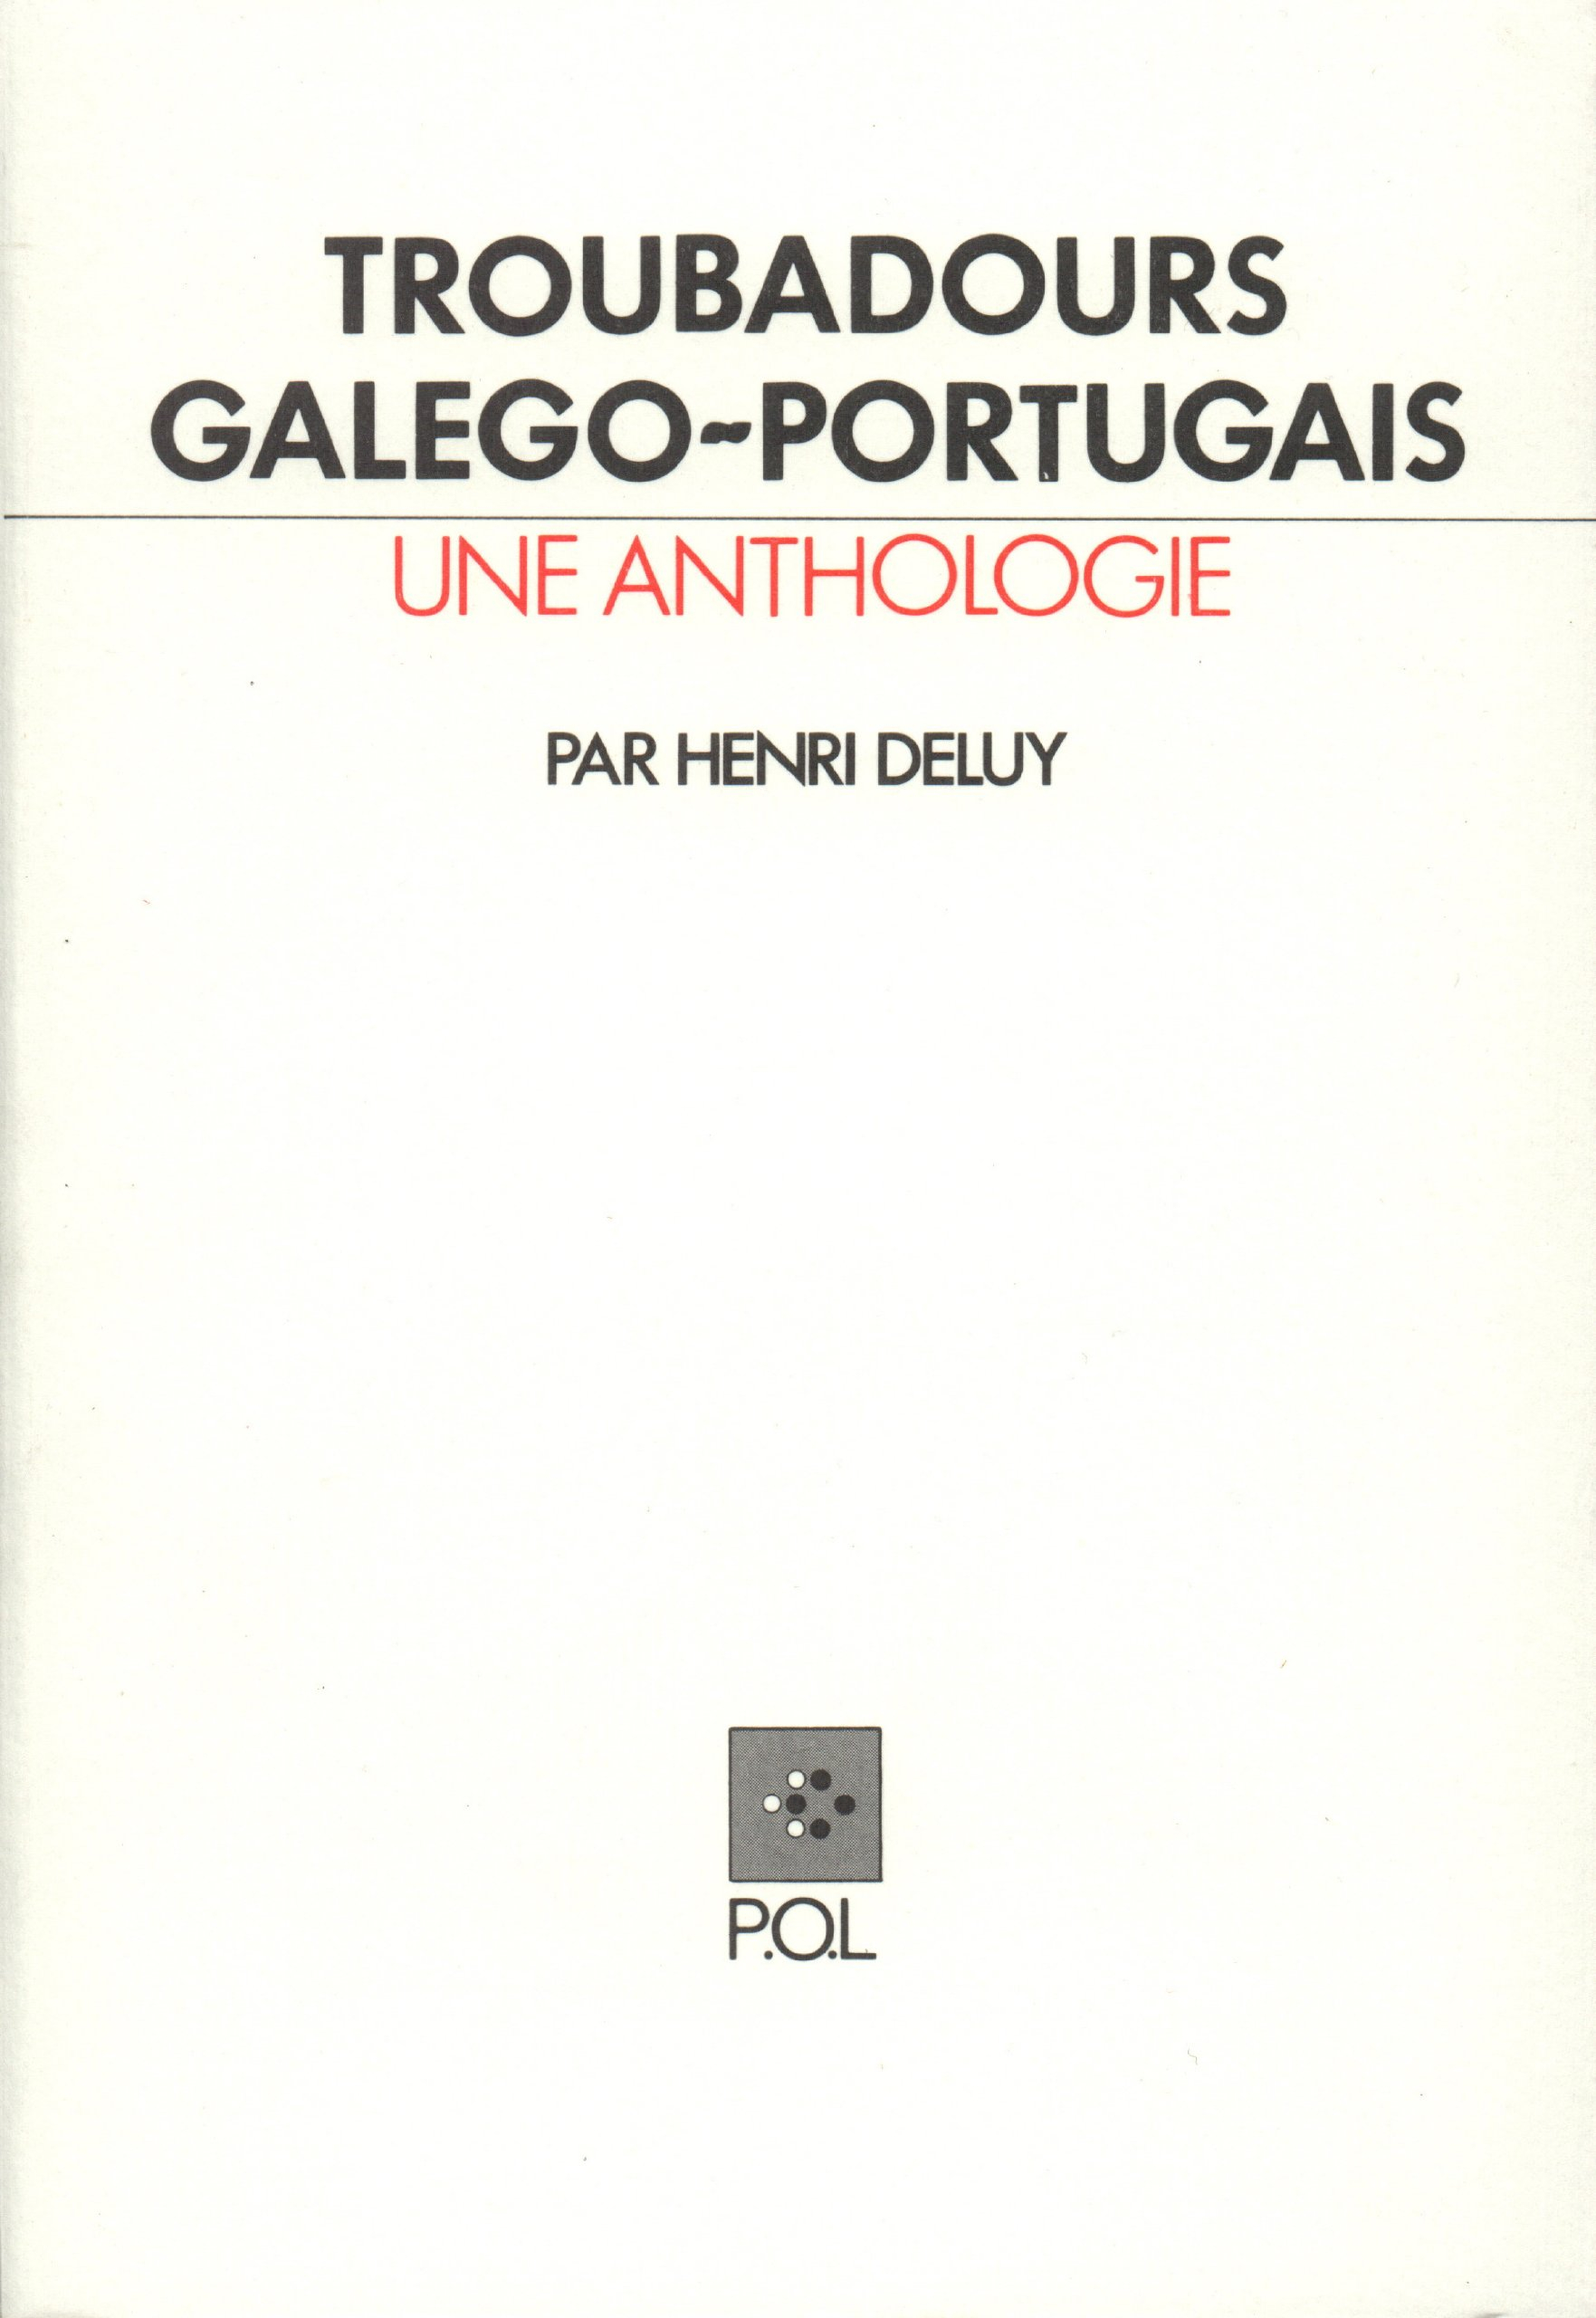 Troubadours galego-portugais : une anthologie